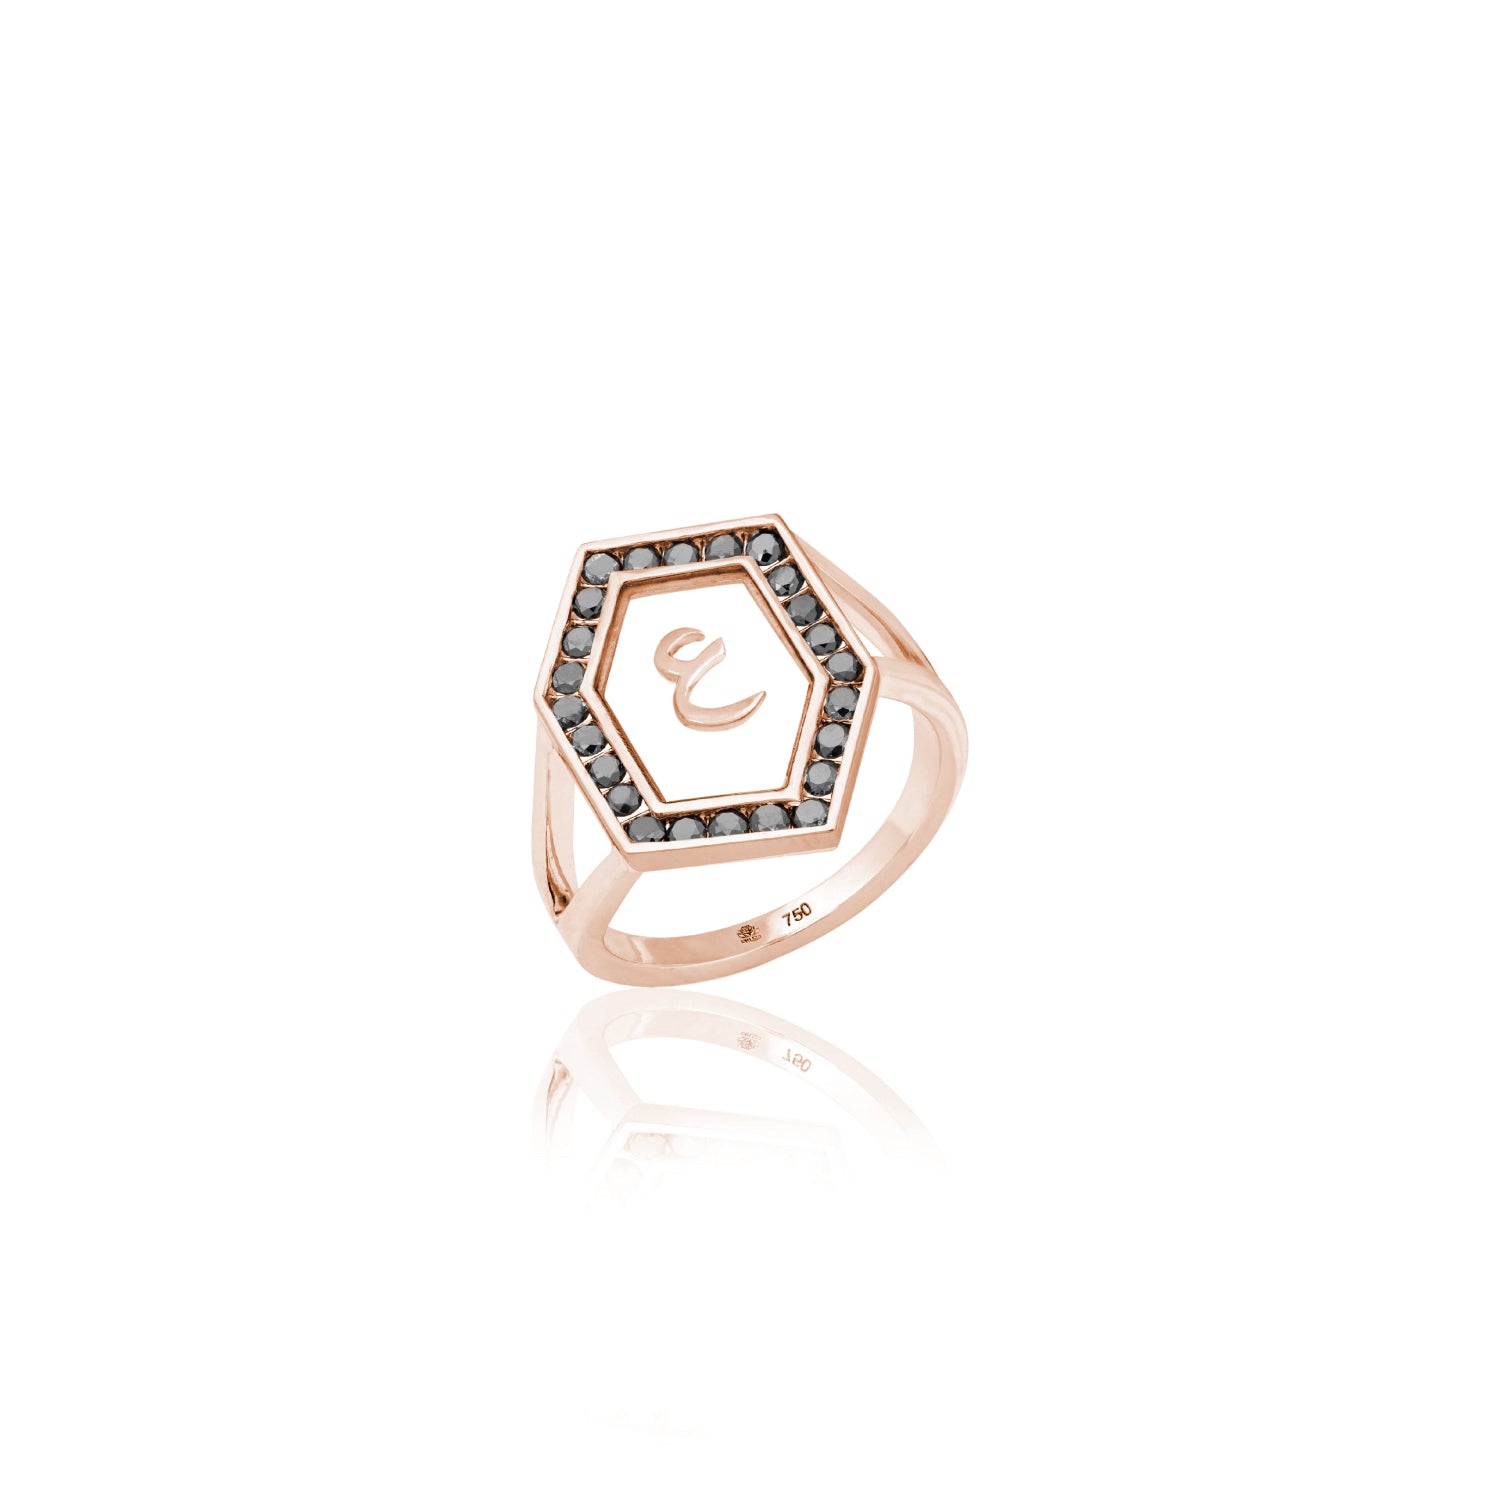 Qamoos 1.0 Letter ع Black Diamond Ring in Rose Gold